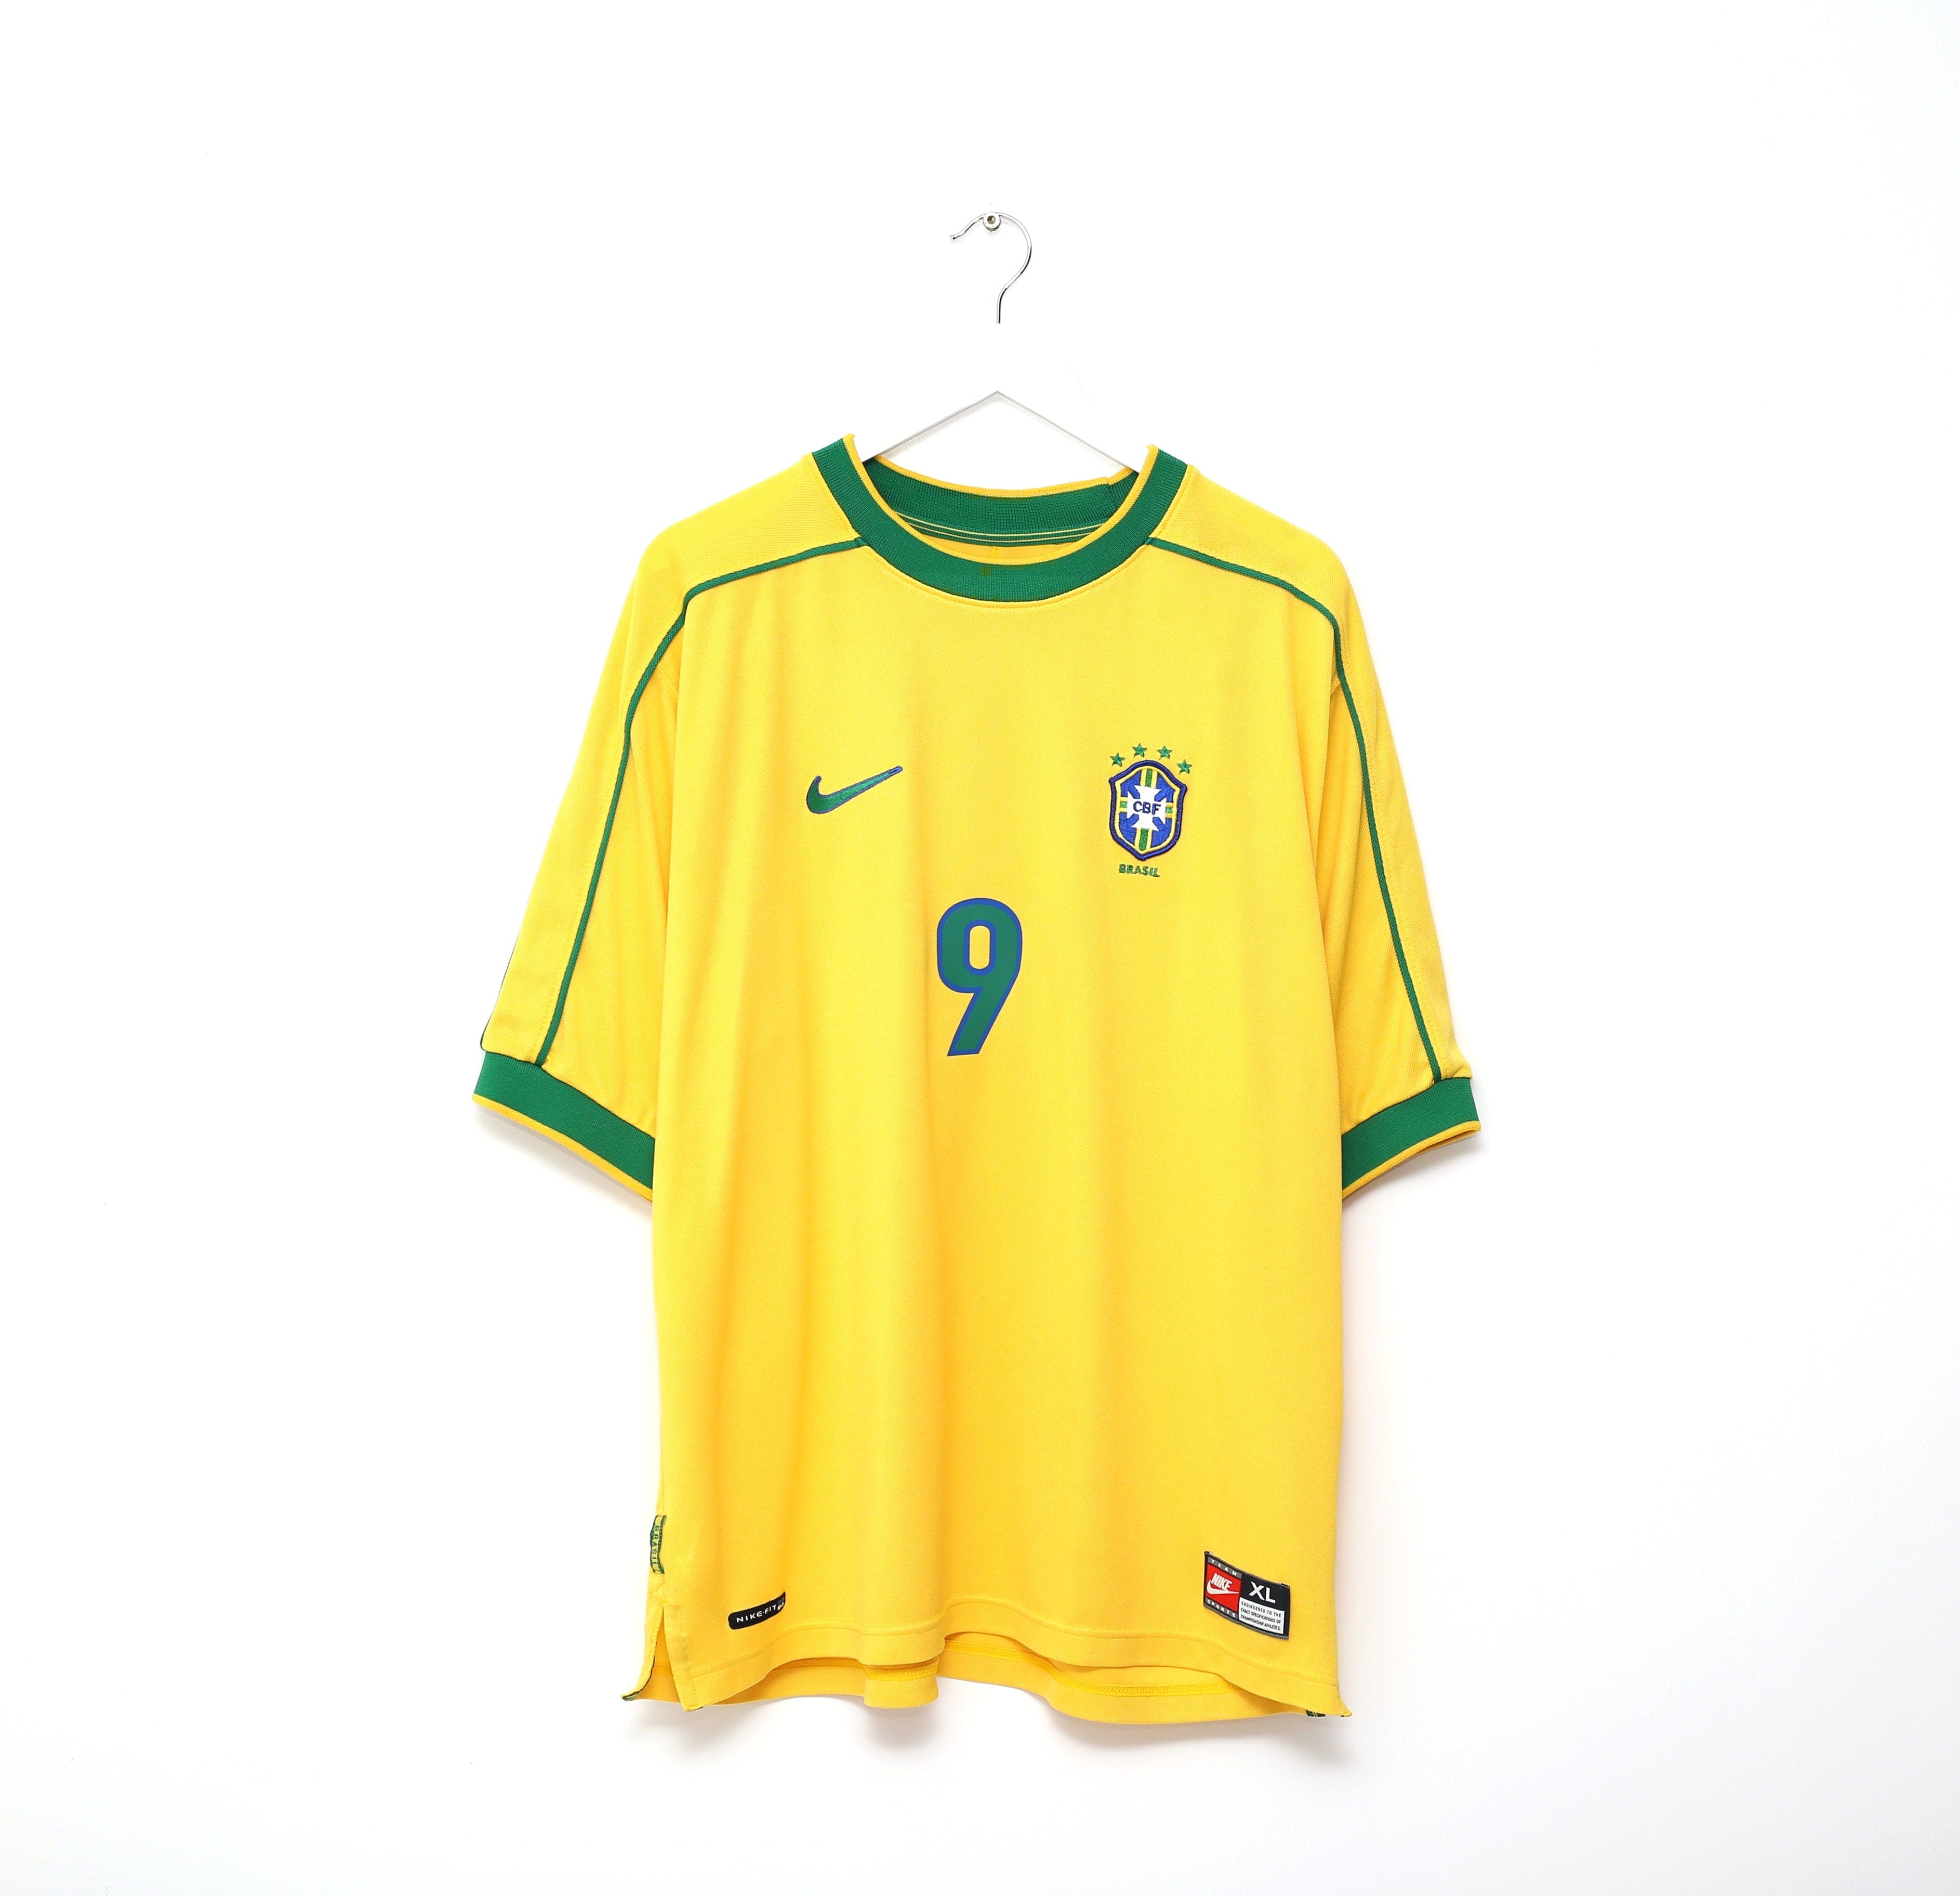 Nike Brazil jersey 9 Ronaldo el fenomene World cup 1998 98 Away men's  S/M/L/XL/XXL football shirt buy & order cheap online shop -   retro, vintage & old football shirts & jersey